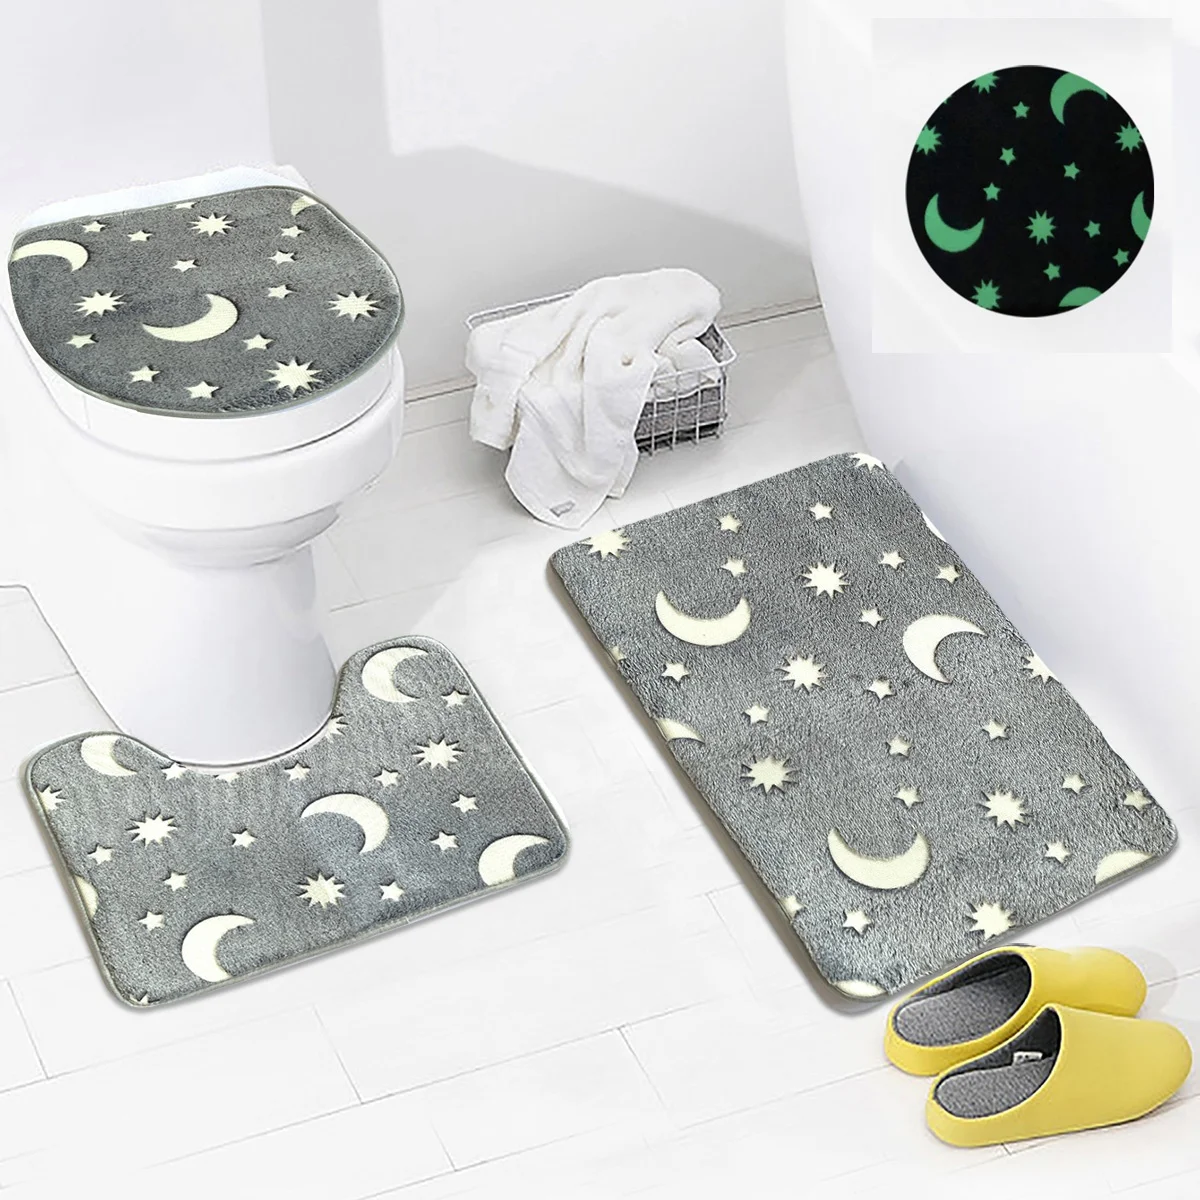 

3 pcs set Anti-slip Bathroom Mat glow in the dark Bathroom Rug microfiber non slip plush bath mat carpet hot sale in amazon, Customized